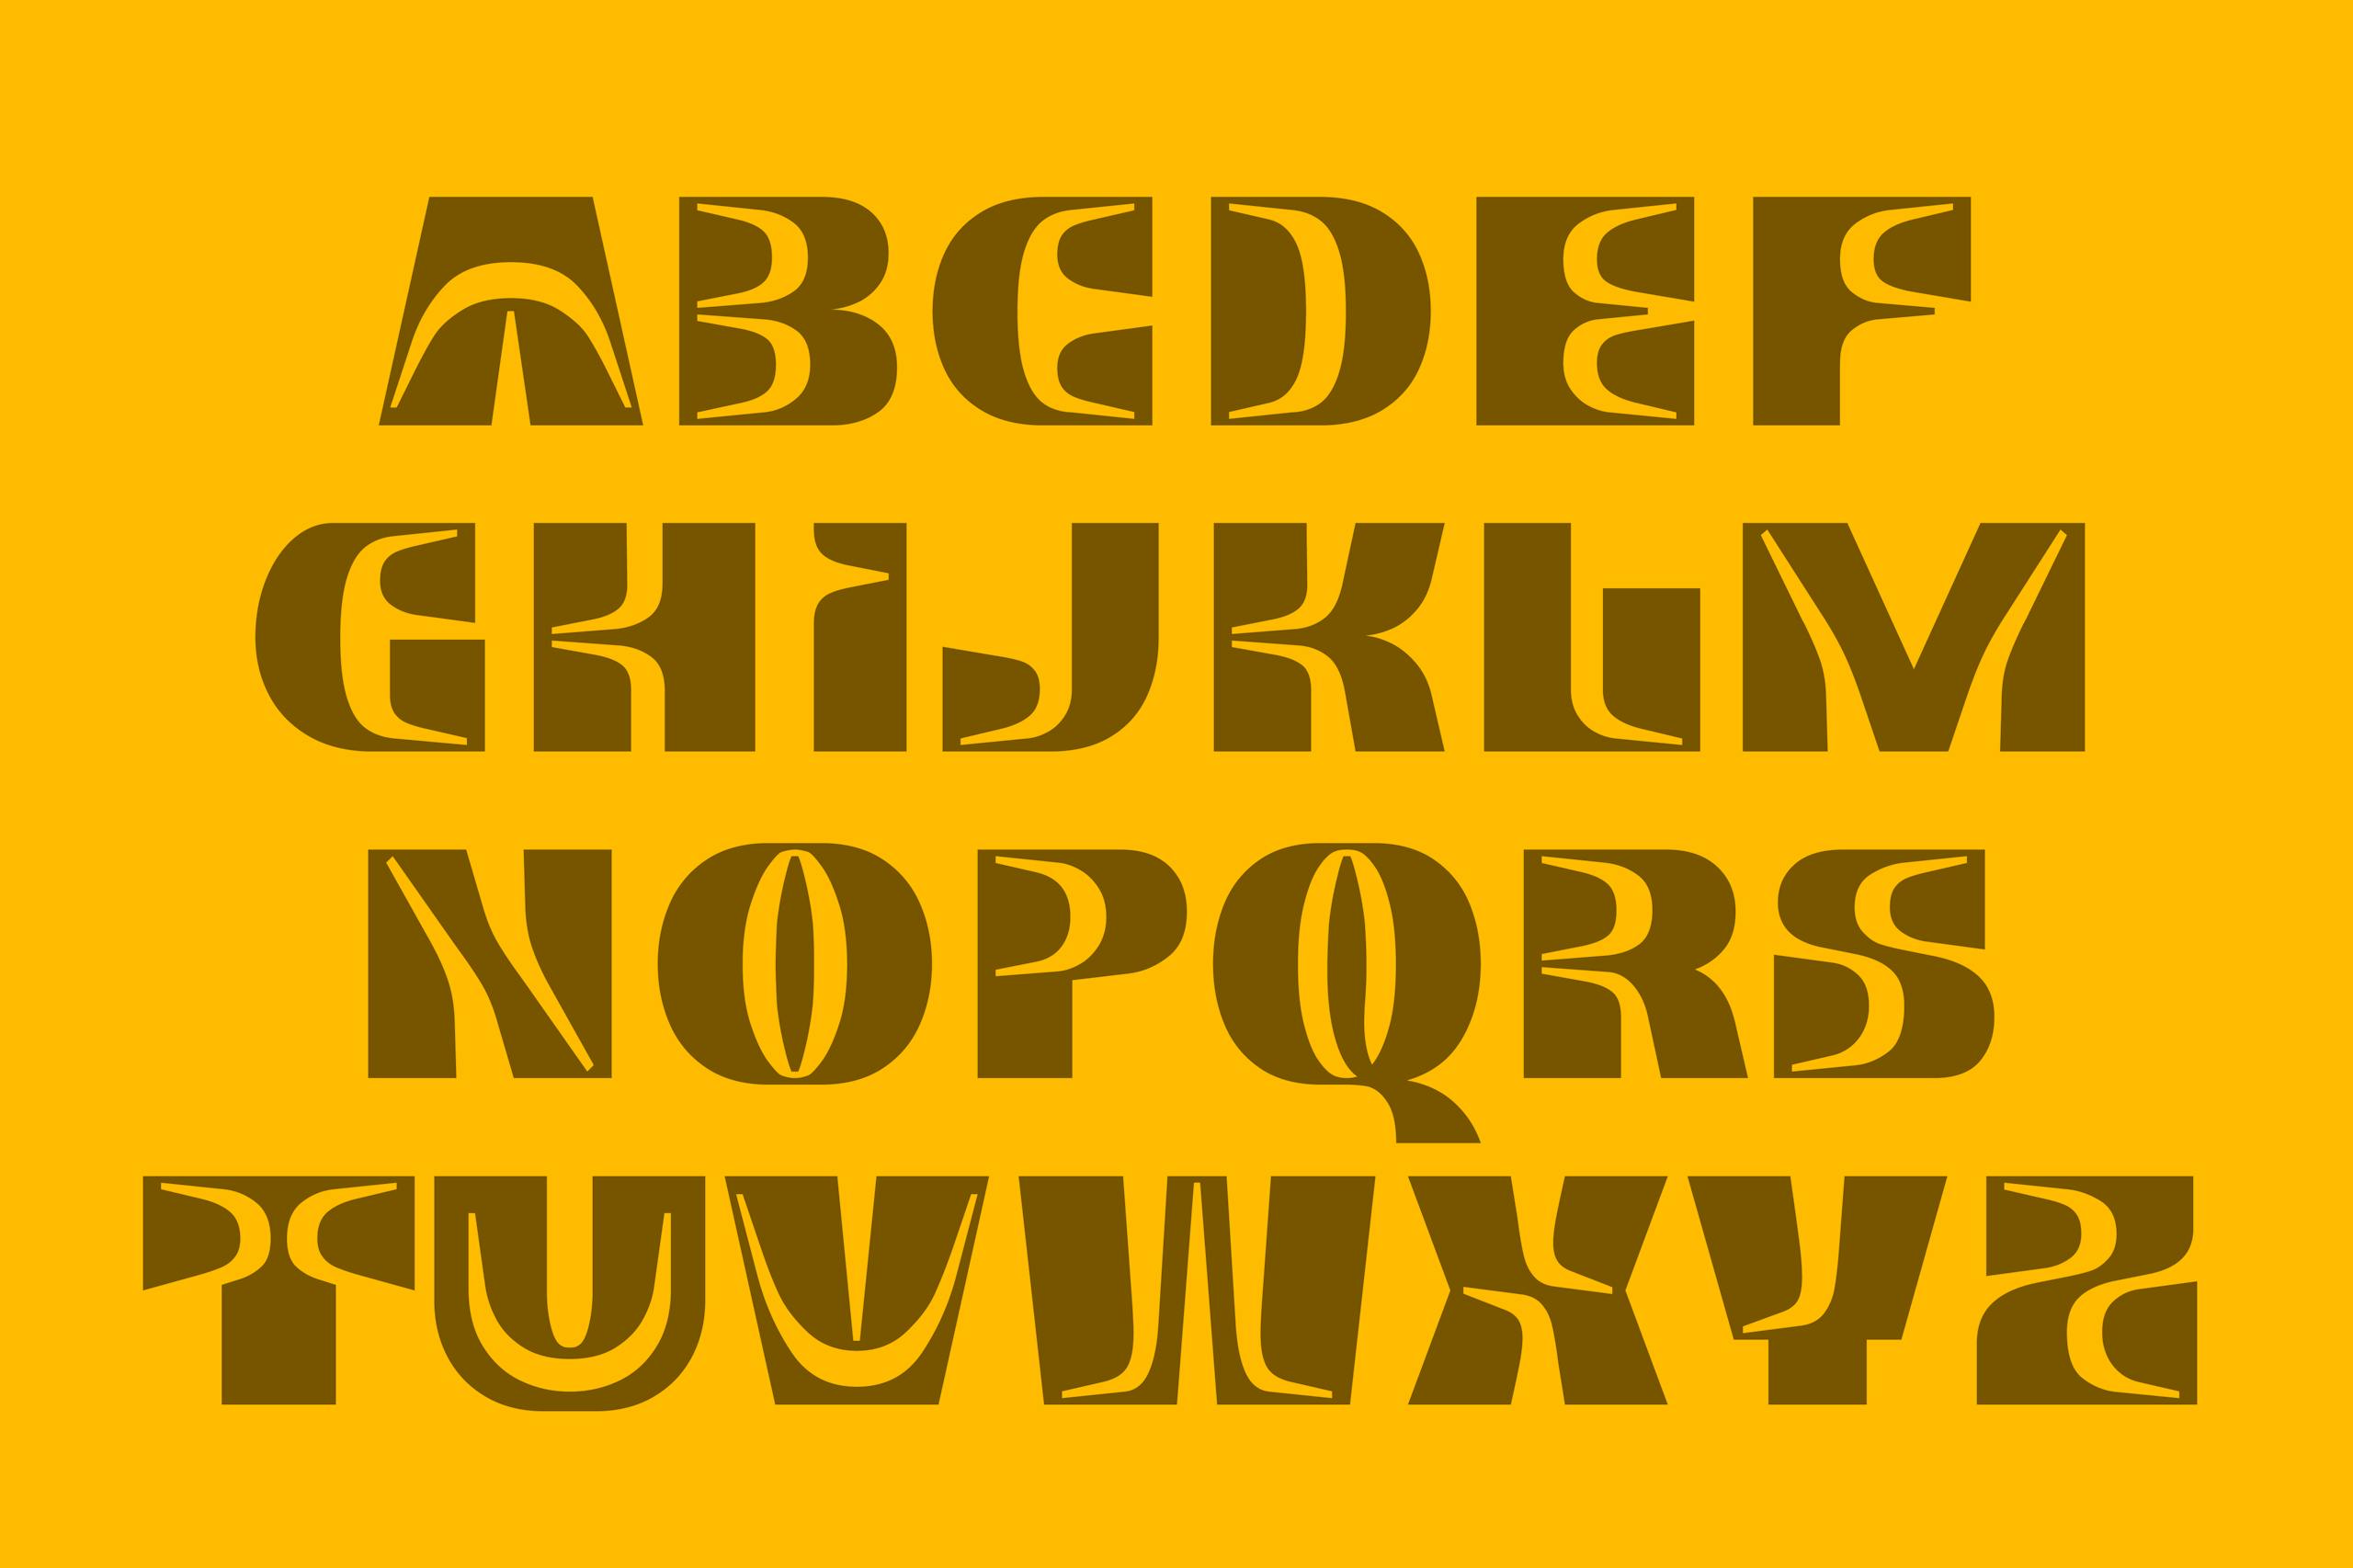 Mandib, Typeface, Gestaltung, Visuelle Gestaltung, Cedric Kegreiss, Basel, Grafik, Graphic, CH, Design